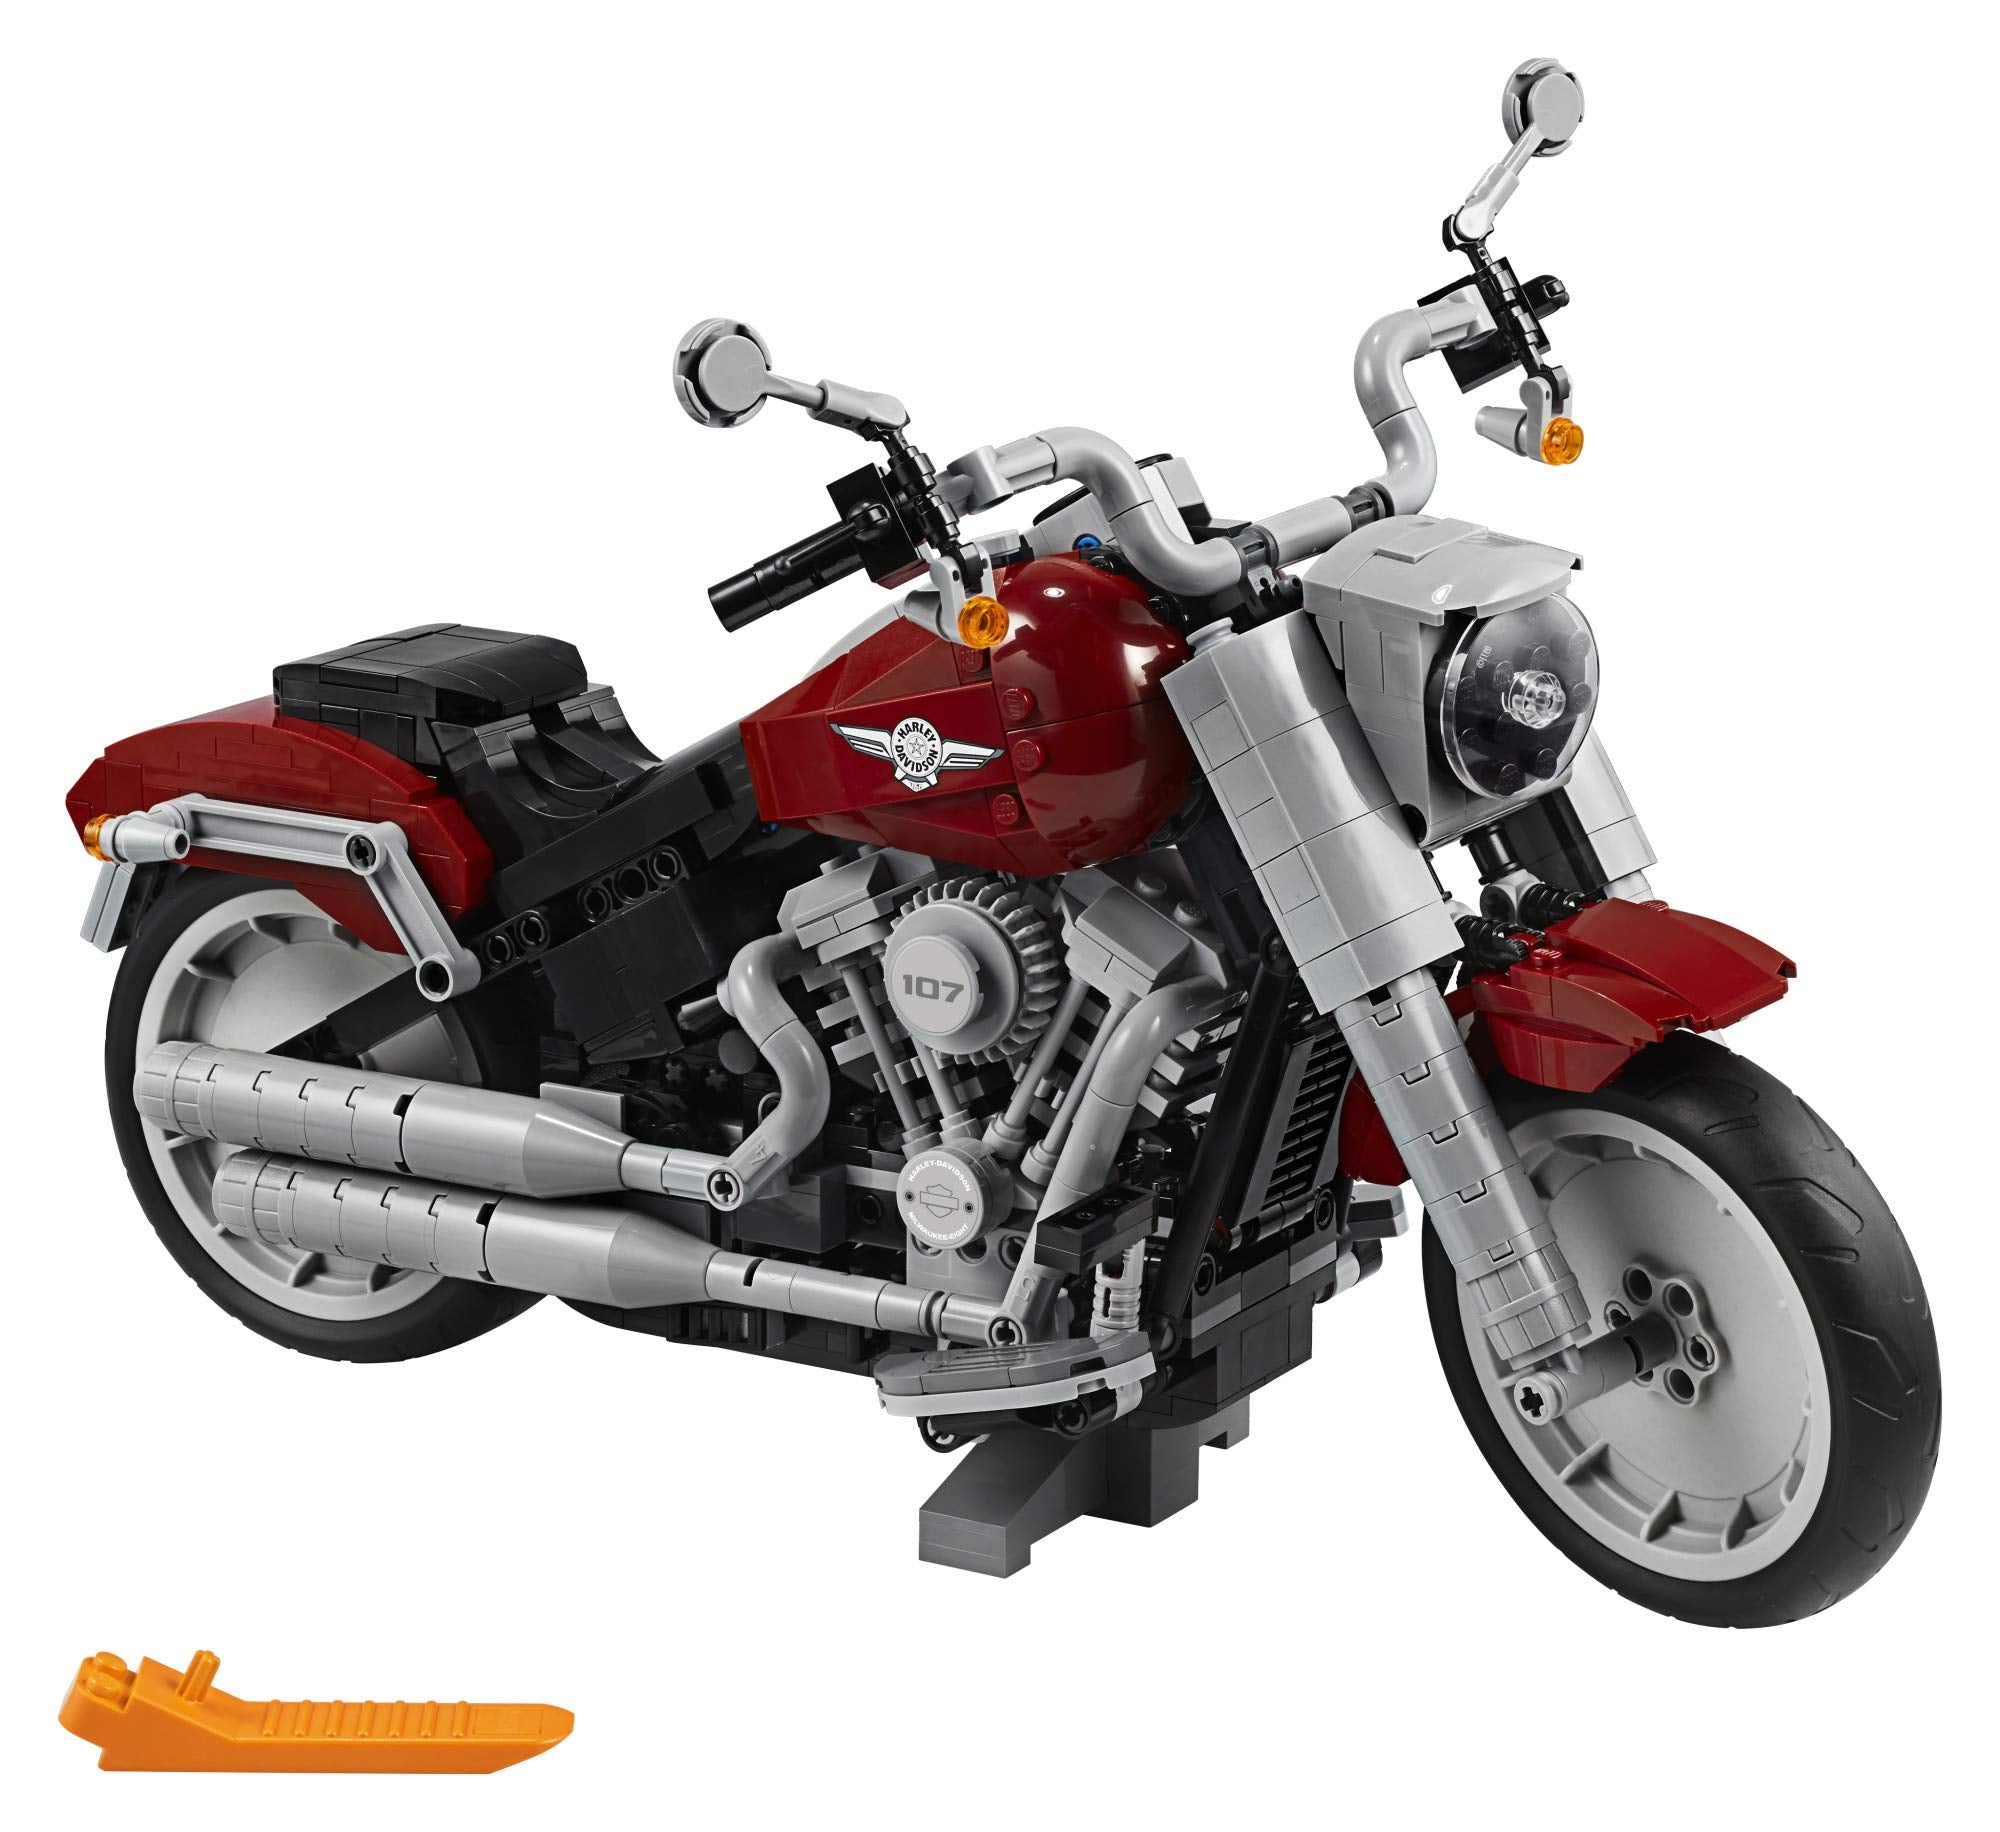 LEGO Creator Expert Harley-Davidson Fat Boy 10269 (1,023 Pieces)